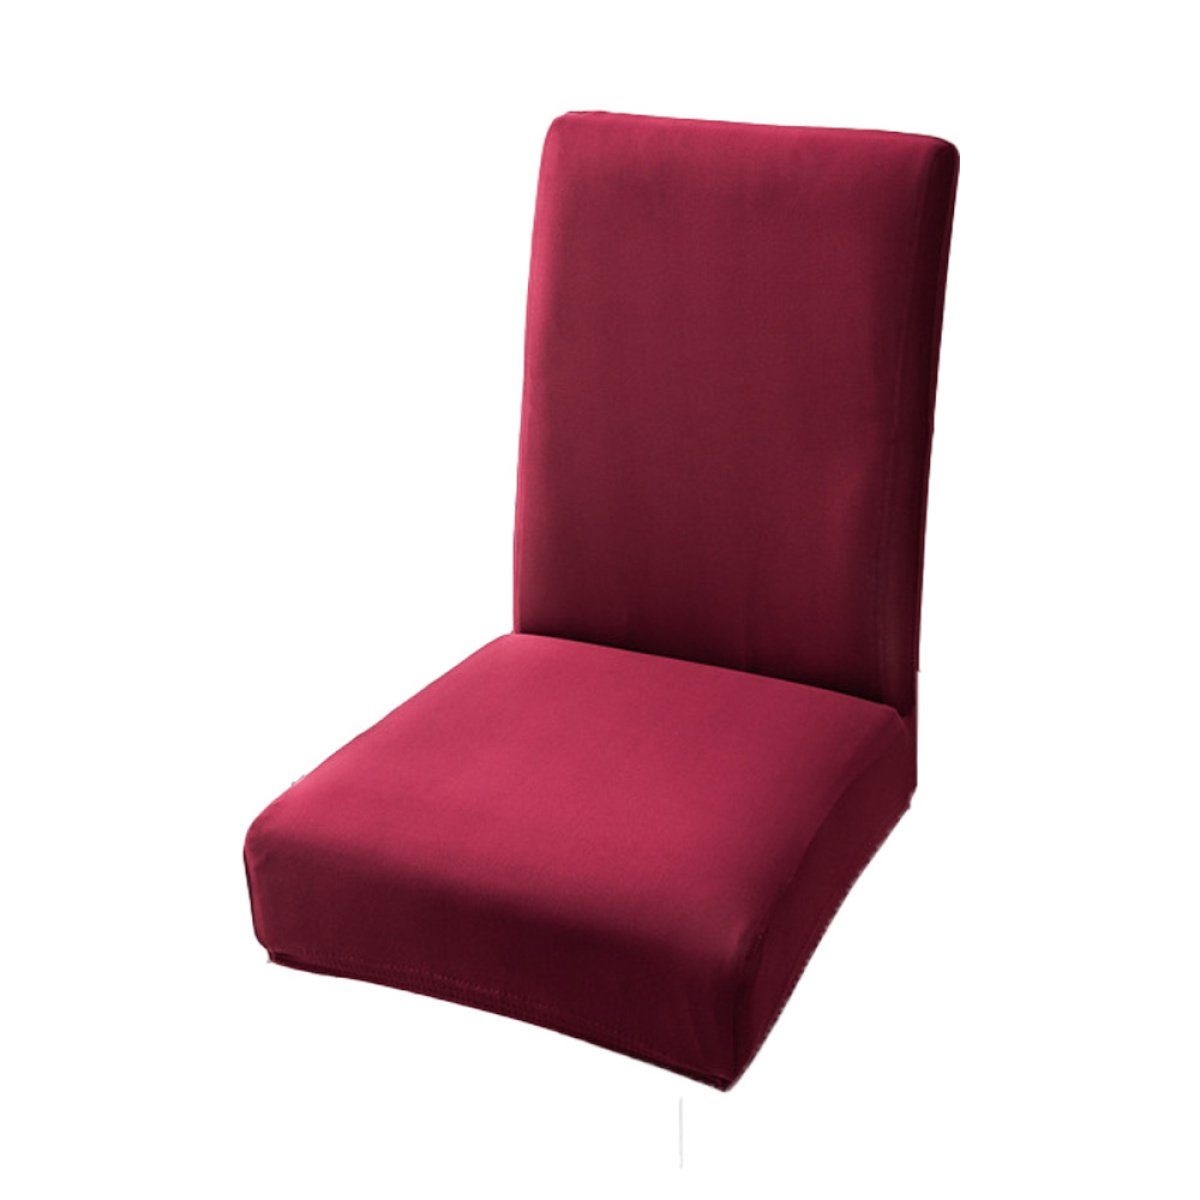 Juoungle Stretch rot Stuhlhusse Stuhlbezug Universal Deko, Stuhlhussen Abnehmbare für